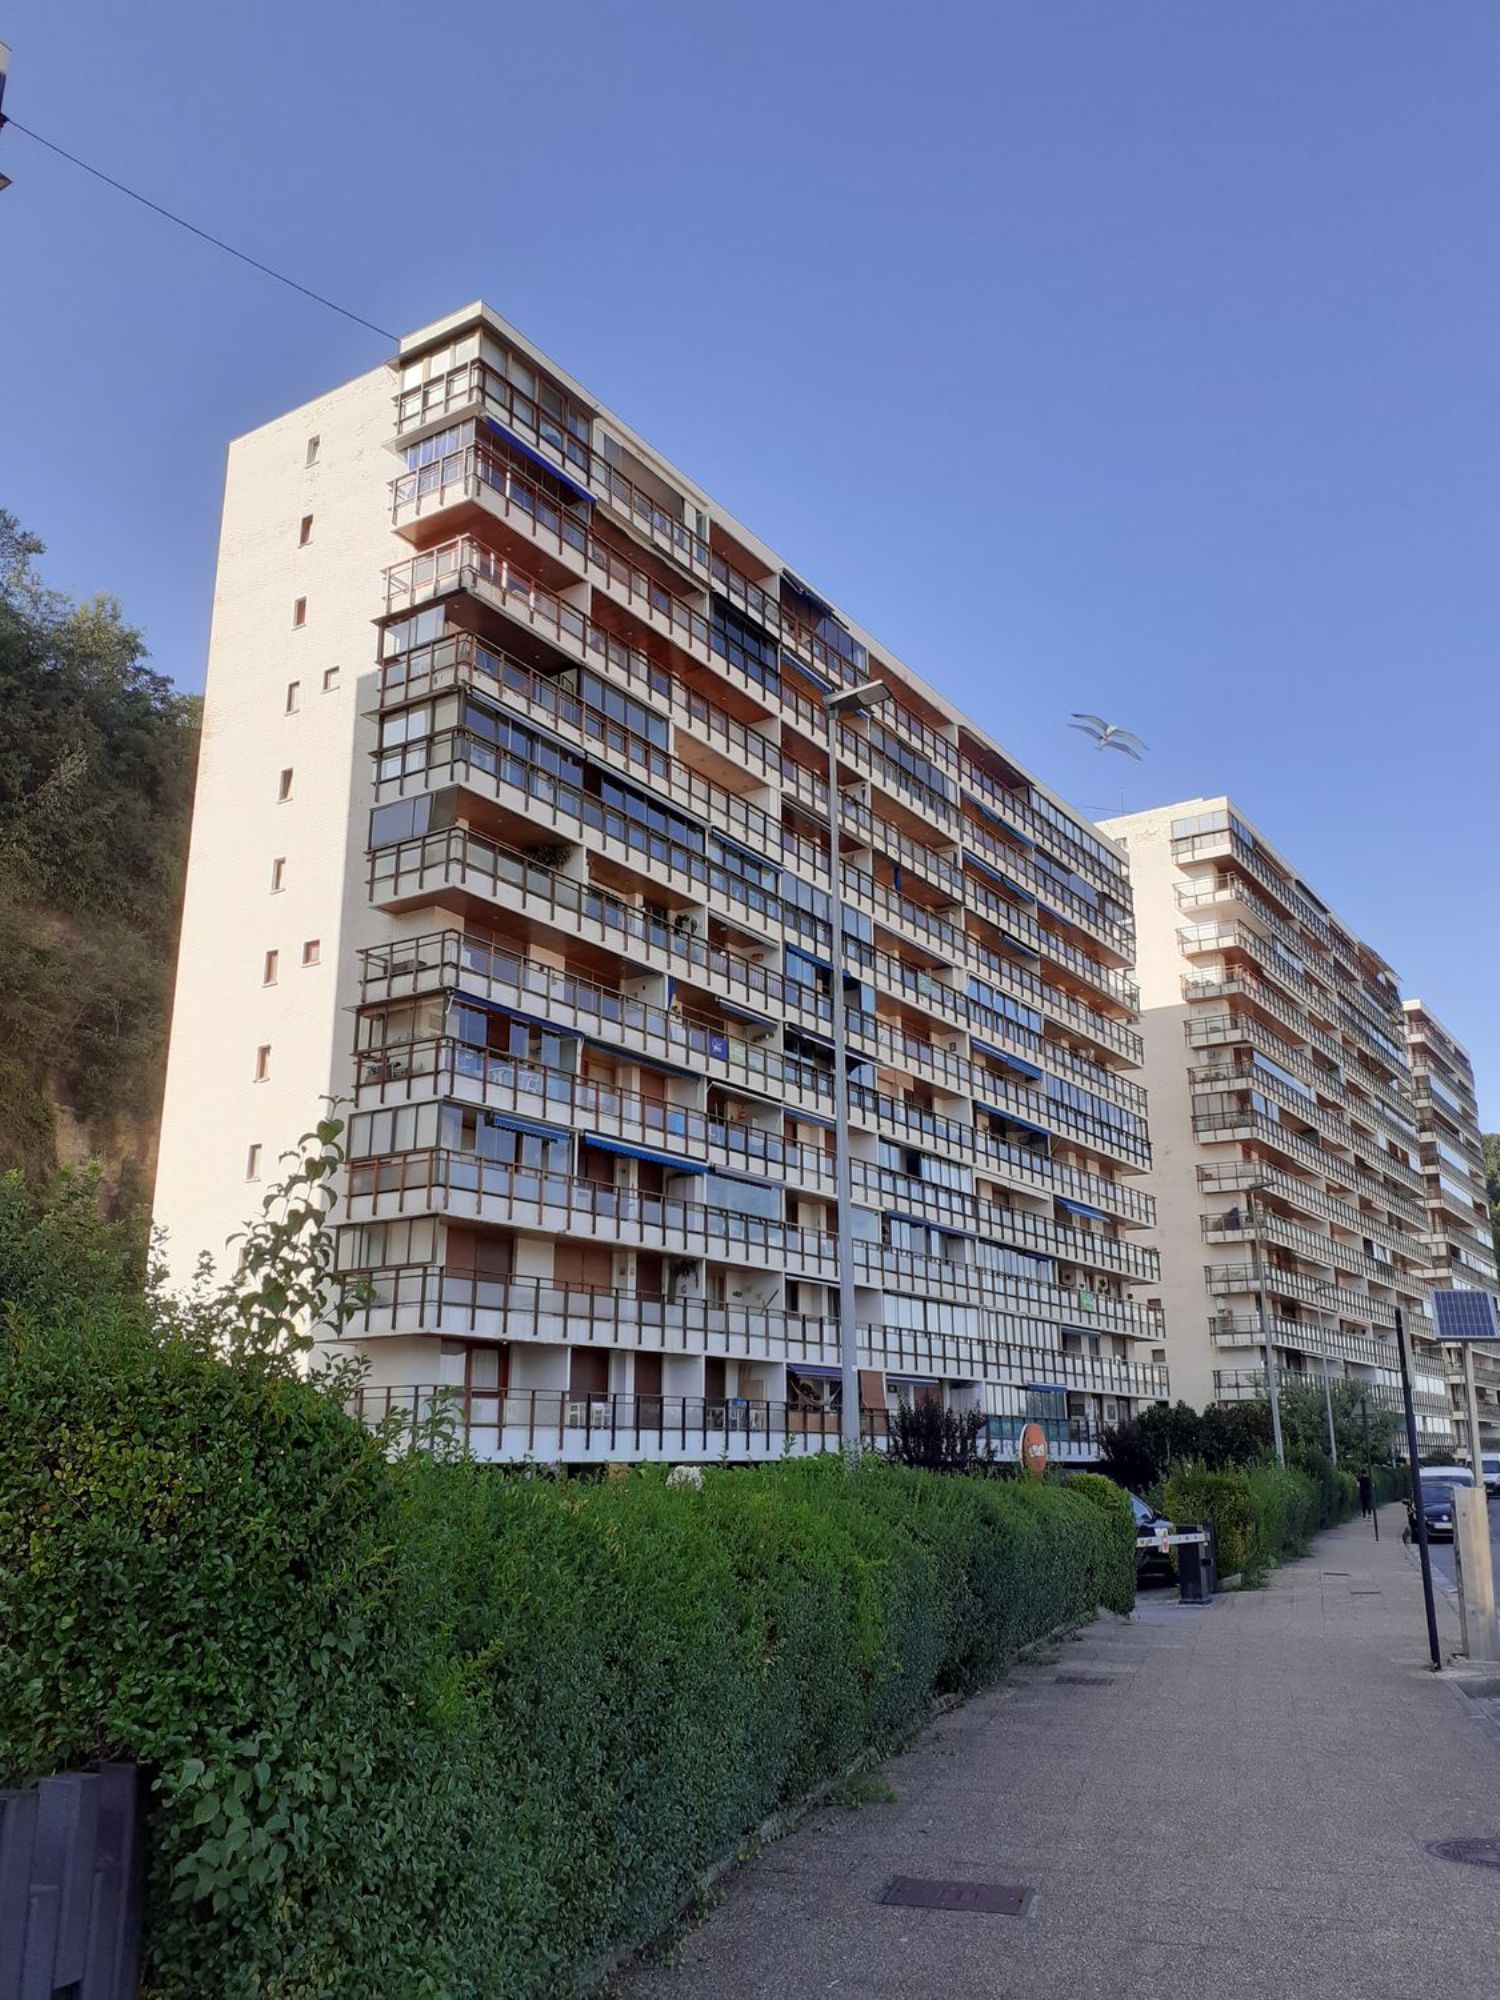 Apartment for sale on the seafront in Ramon Iribarren Pasealekua Ibilbidea, in Hondarribia